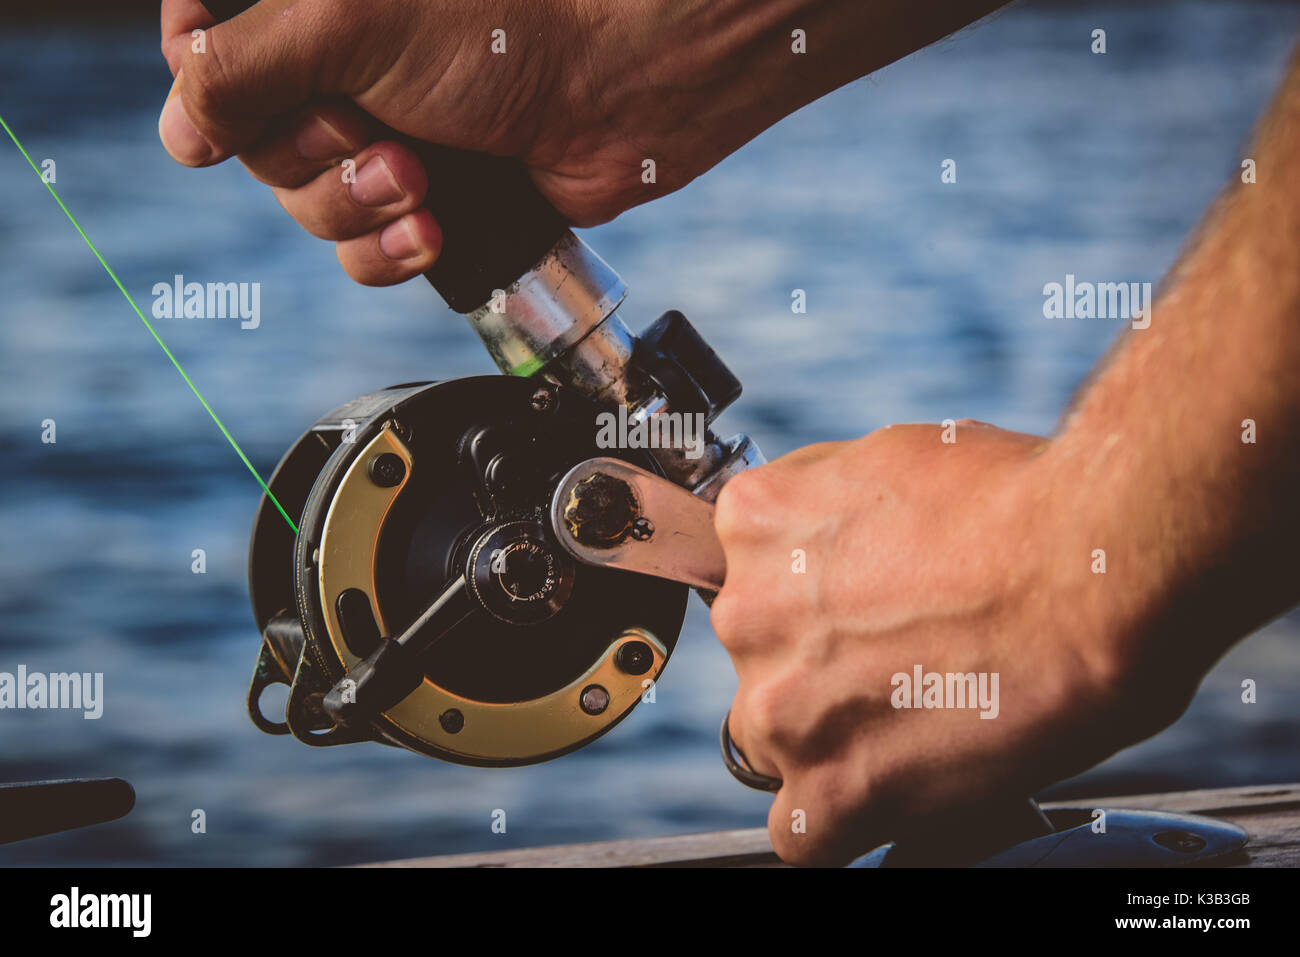 https://c8.alamy.com/comp/K3B3GB/close-up-hands-on-fishing-reel-K3B3GB.jpg